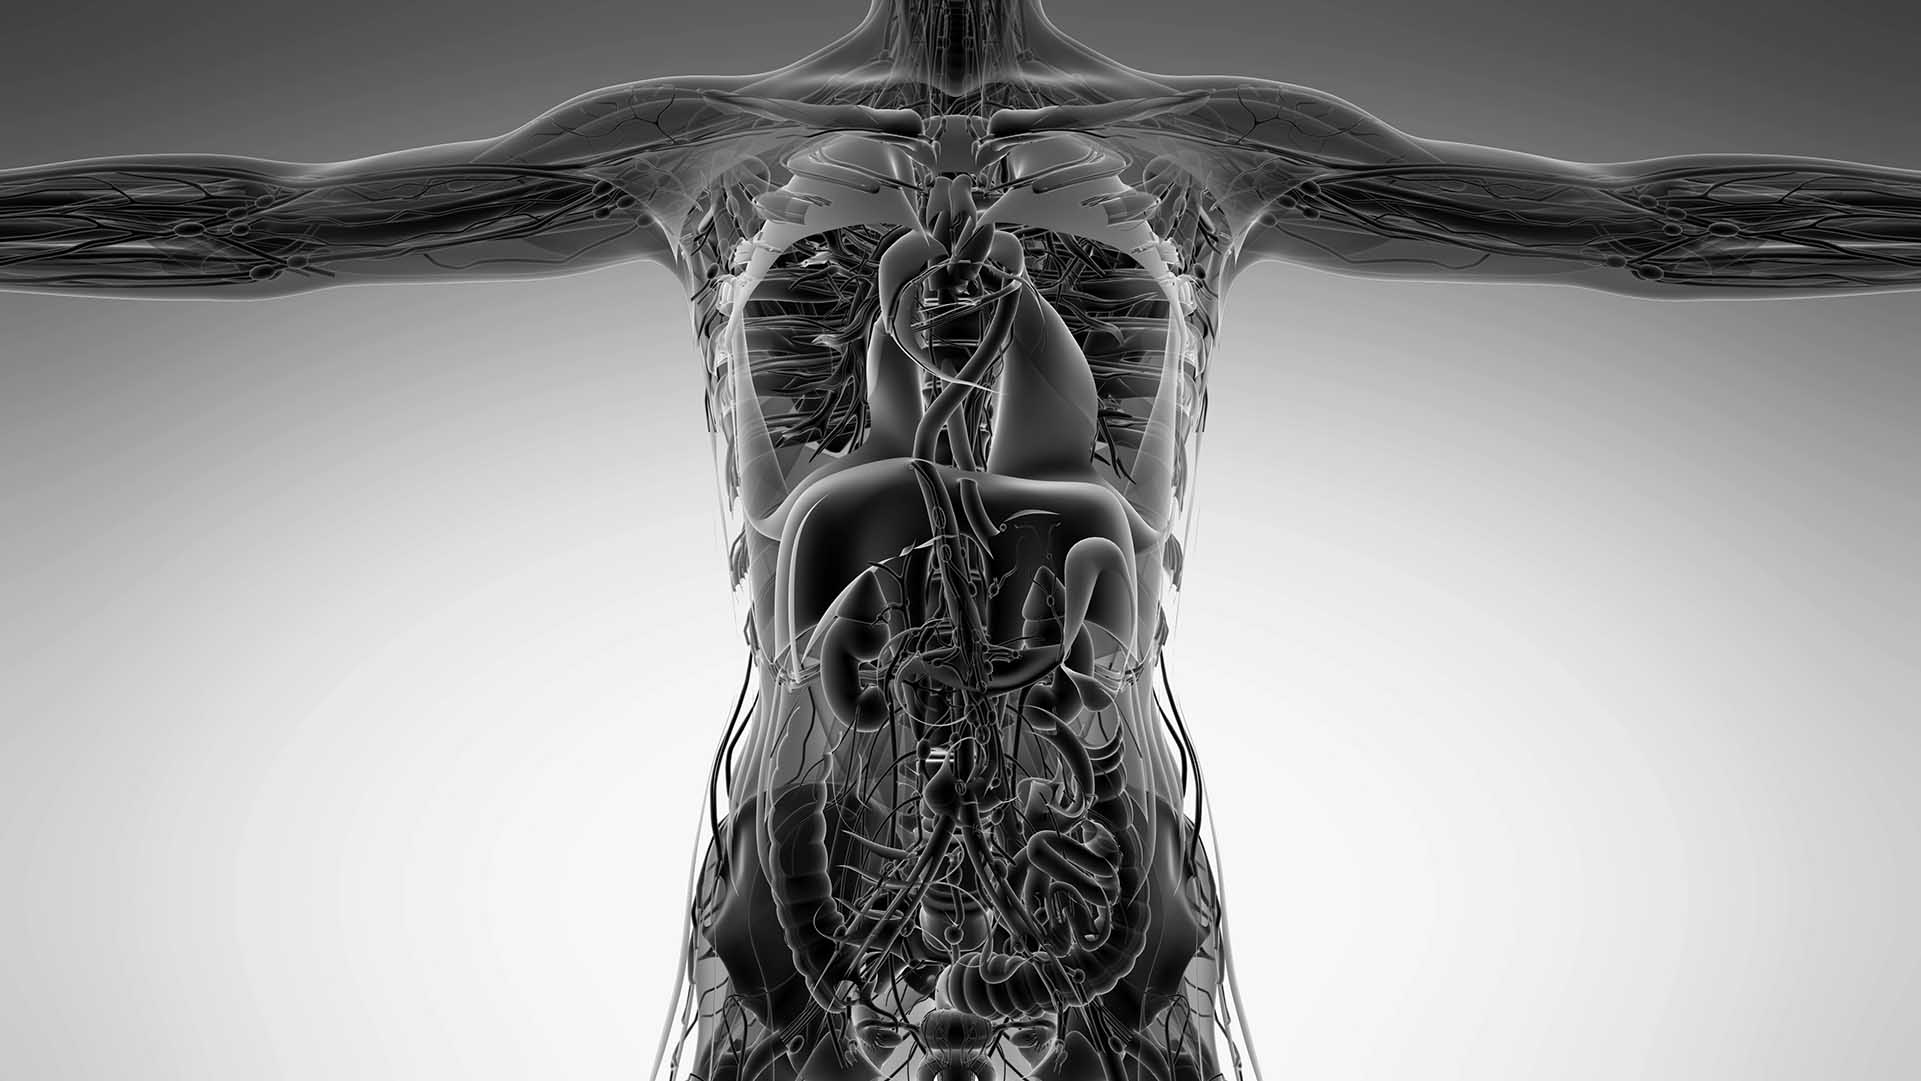 sc_Anatomy-Tomography-scan-of-human-body_34534564